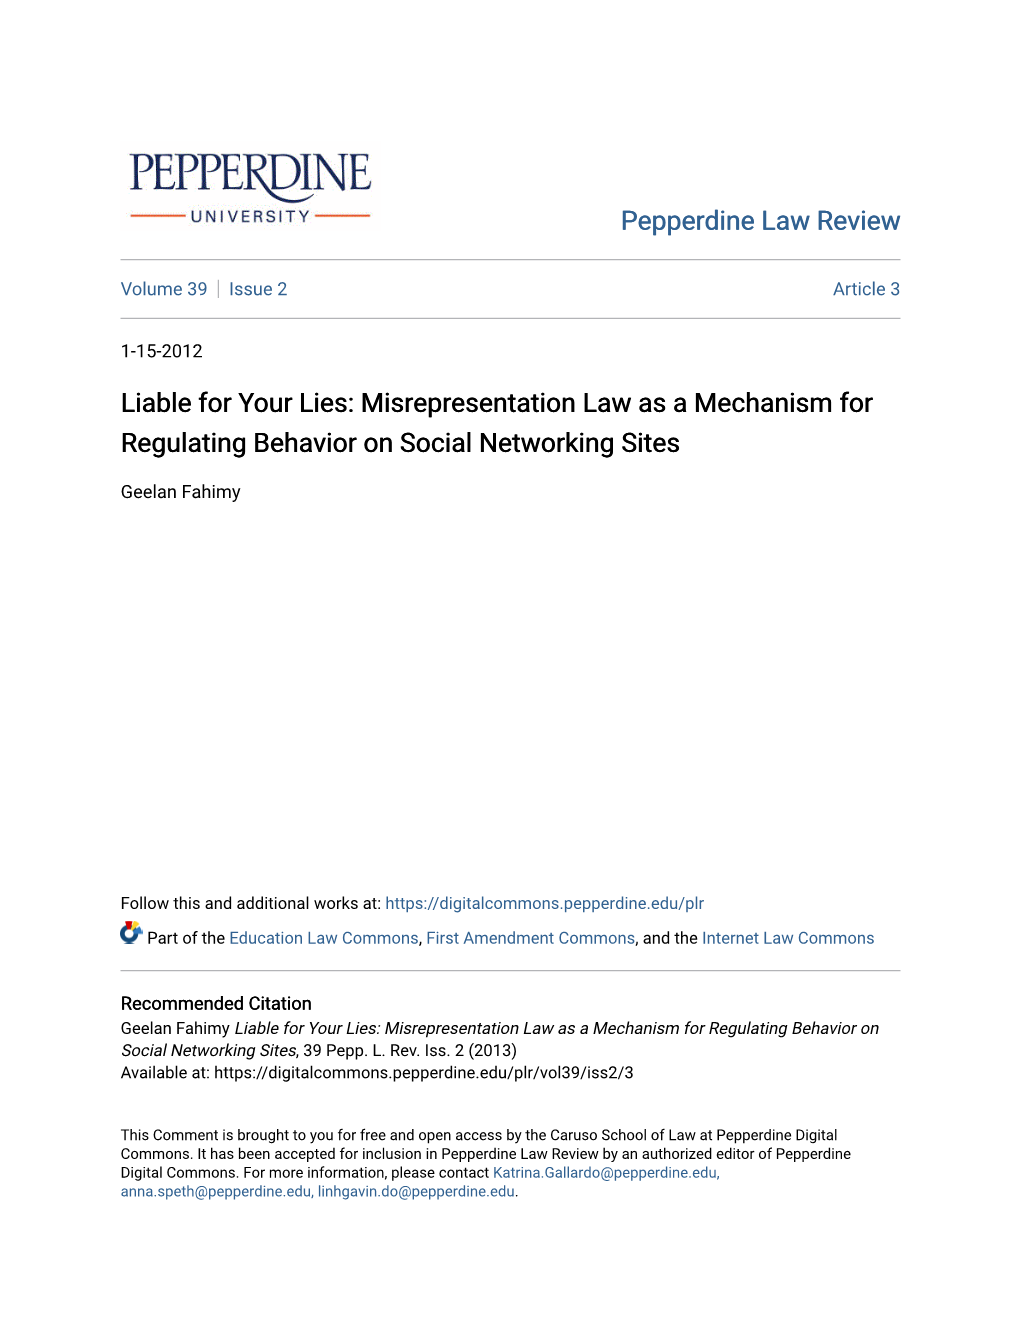 Misrepresentation Law As a Mechanism for Regulating Behavior on Social Networking Sites